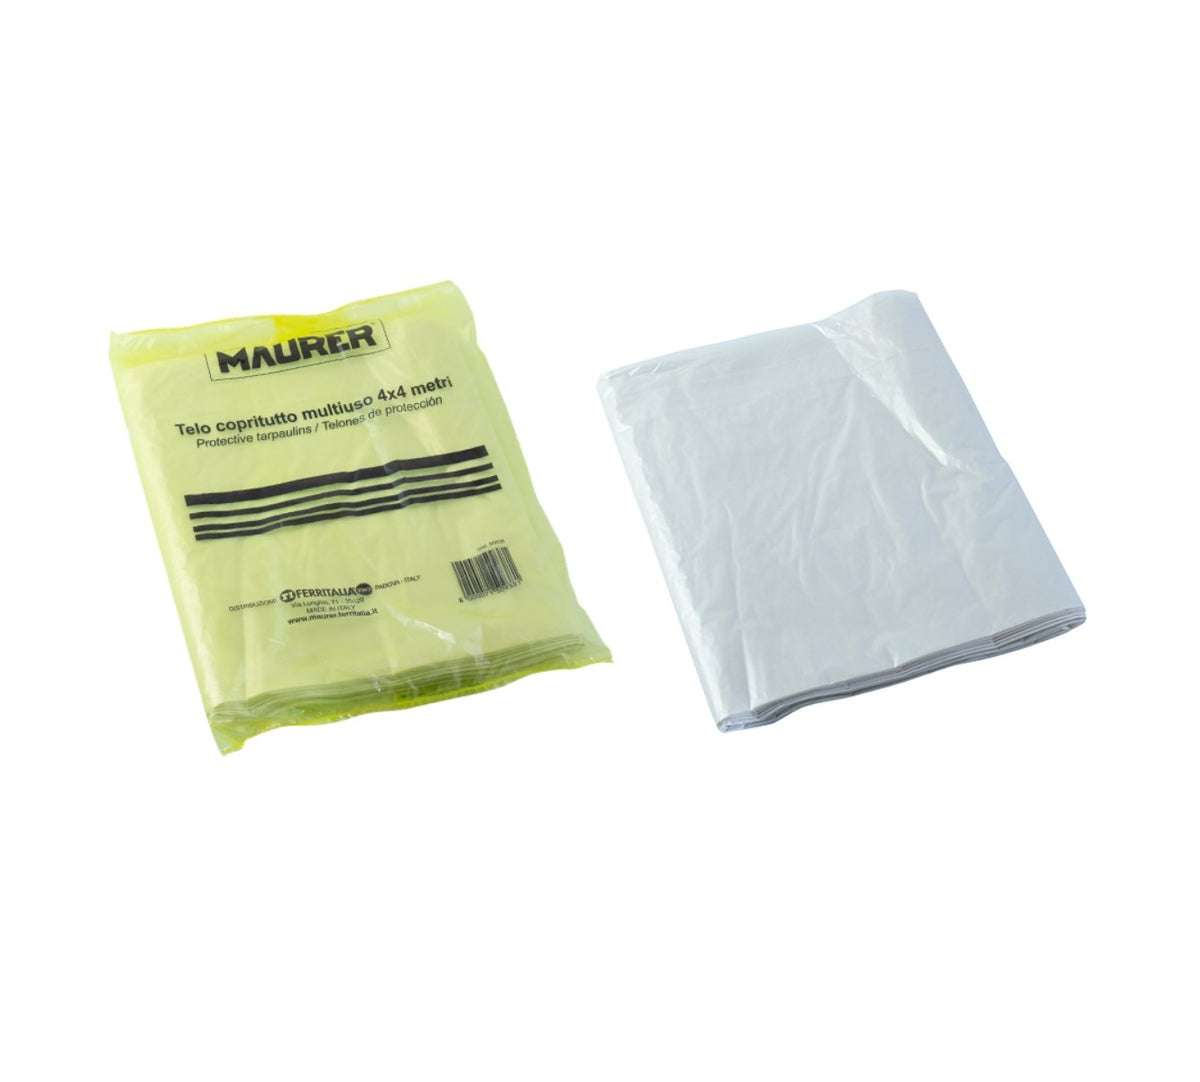 Polyethylene multipurpose cover sheet 4x4m 16sqm - Maurer